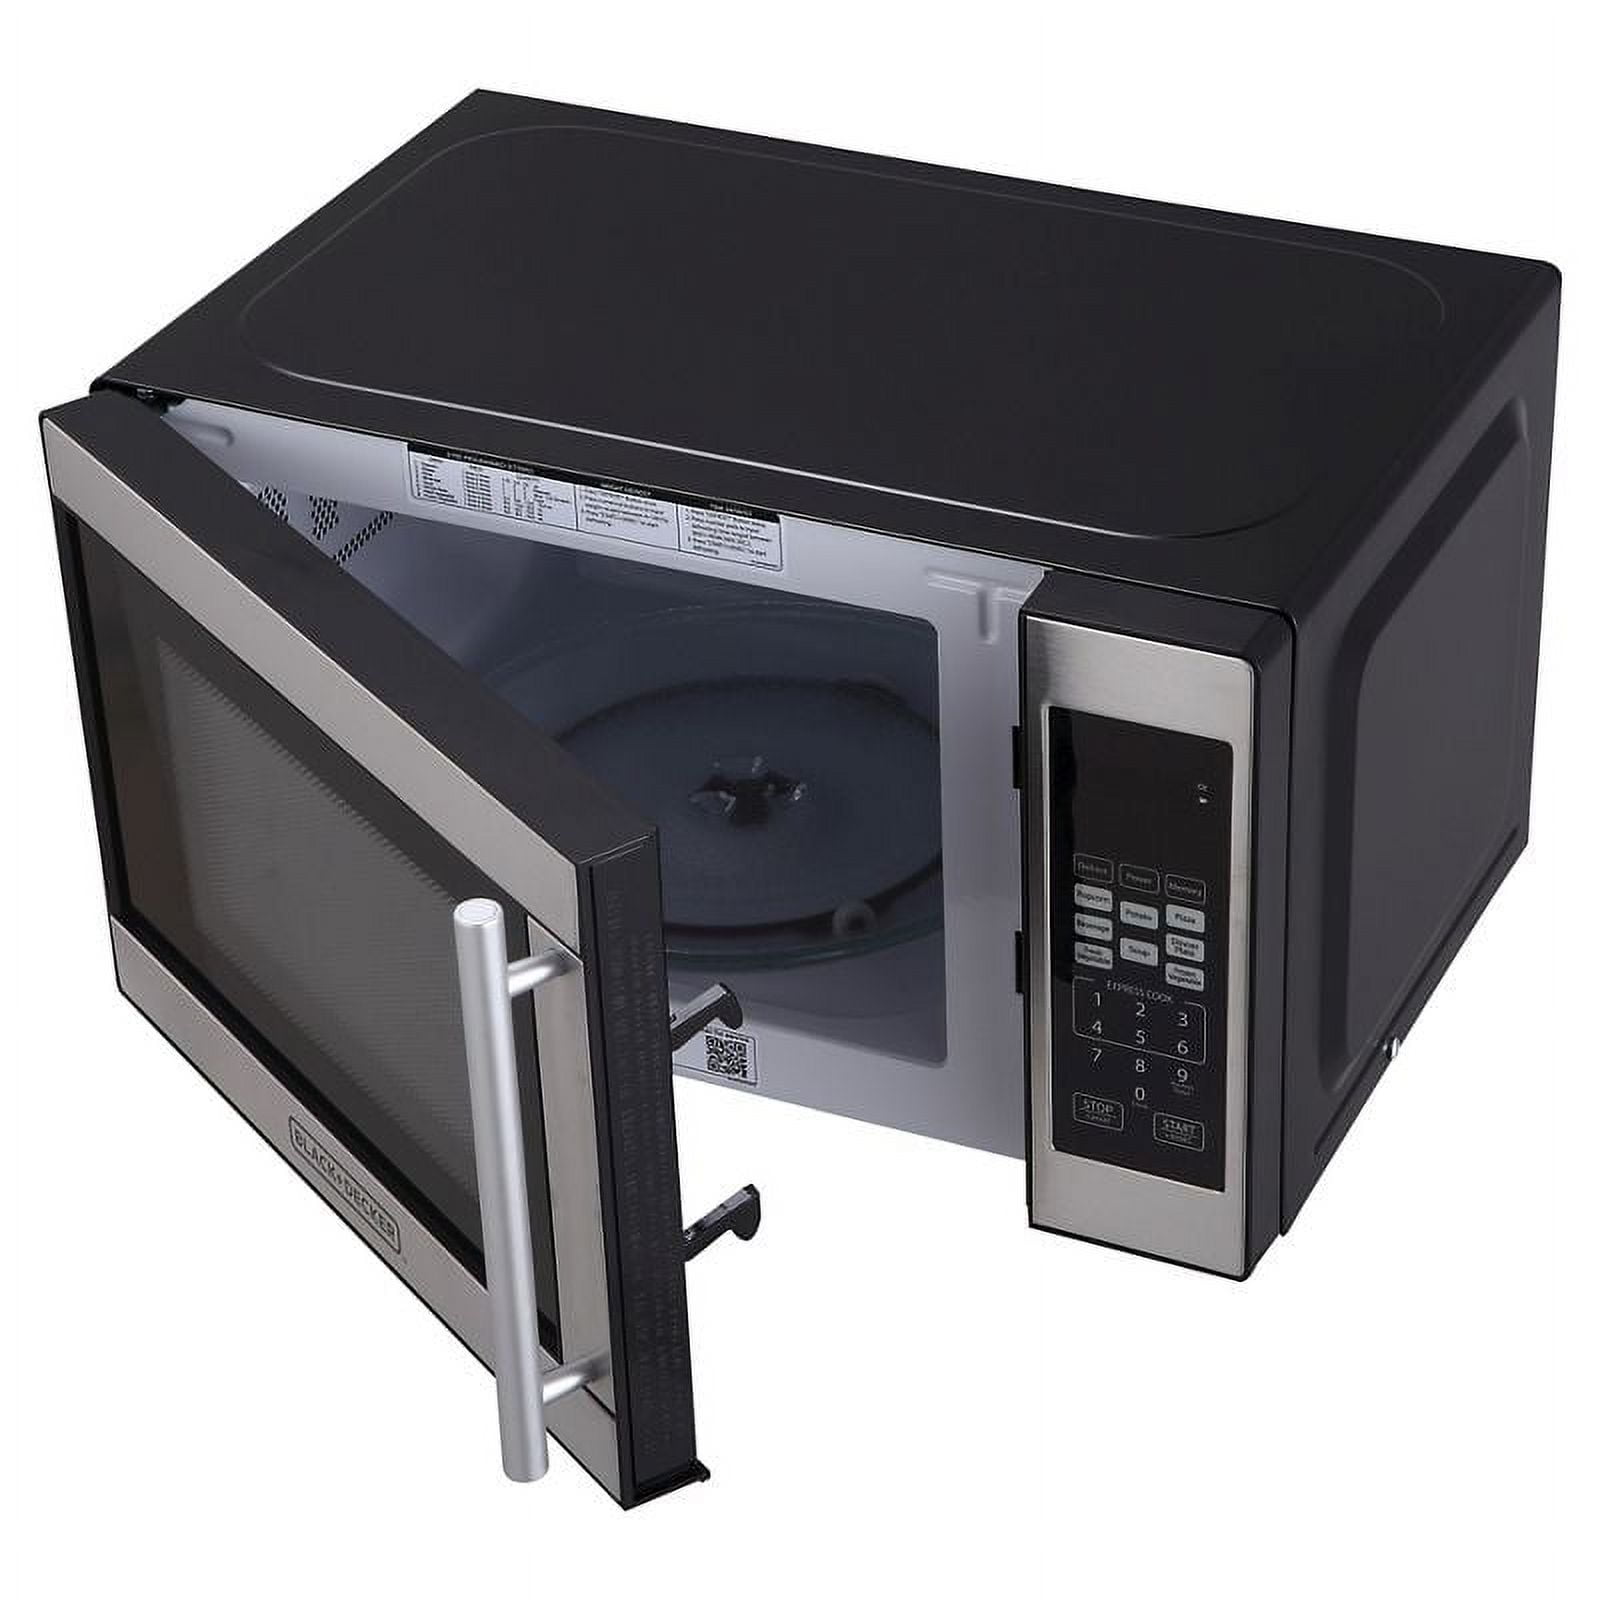 BLACK+DECKER EM720CPY-PM 0.7 Cu. Ft. Countertop Digital Microwave -  839724011968